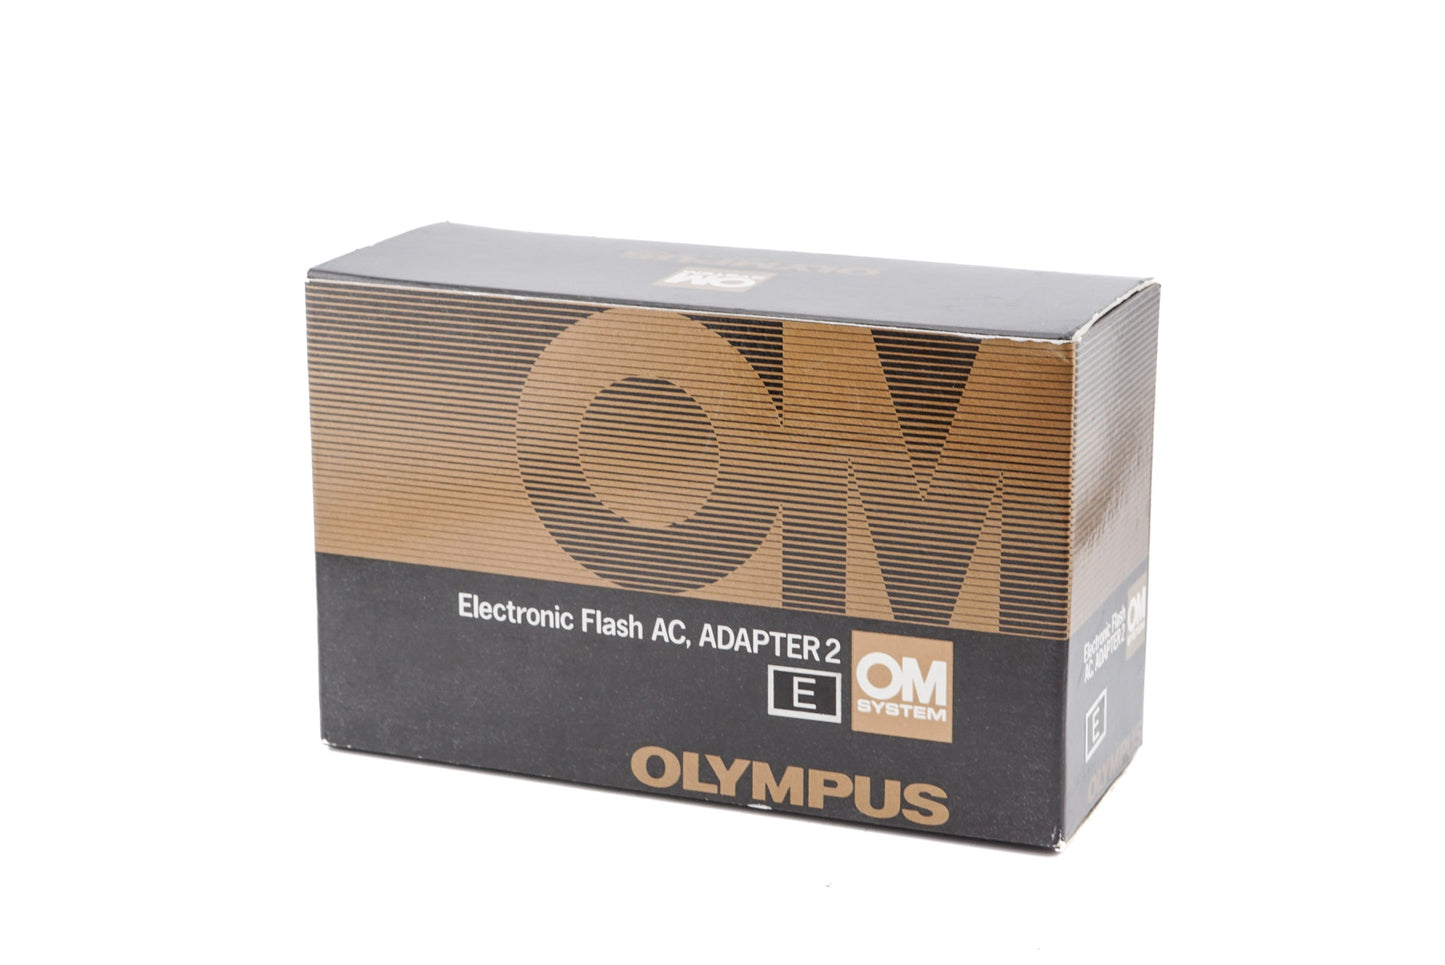 Olympus Electronic Flash AC Adapter 2